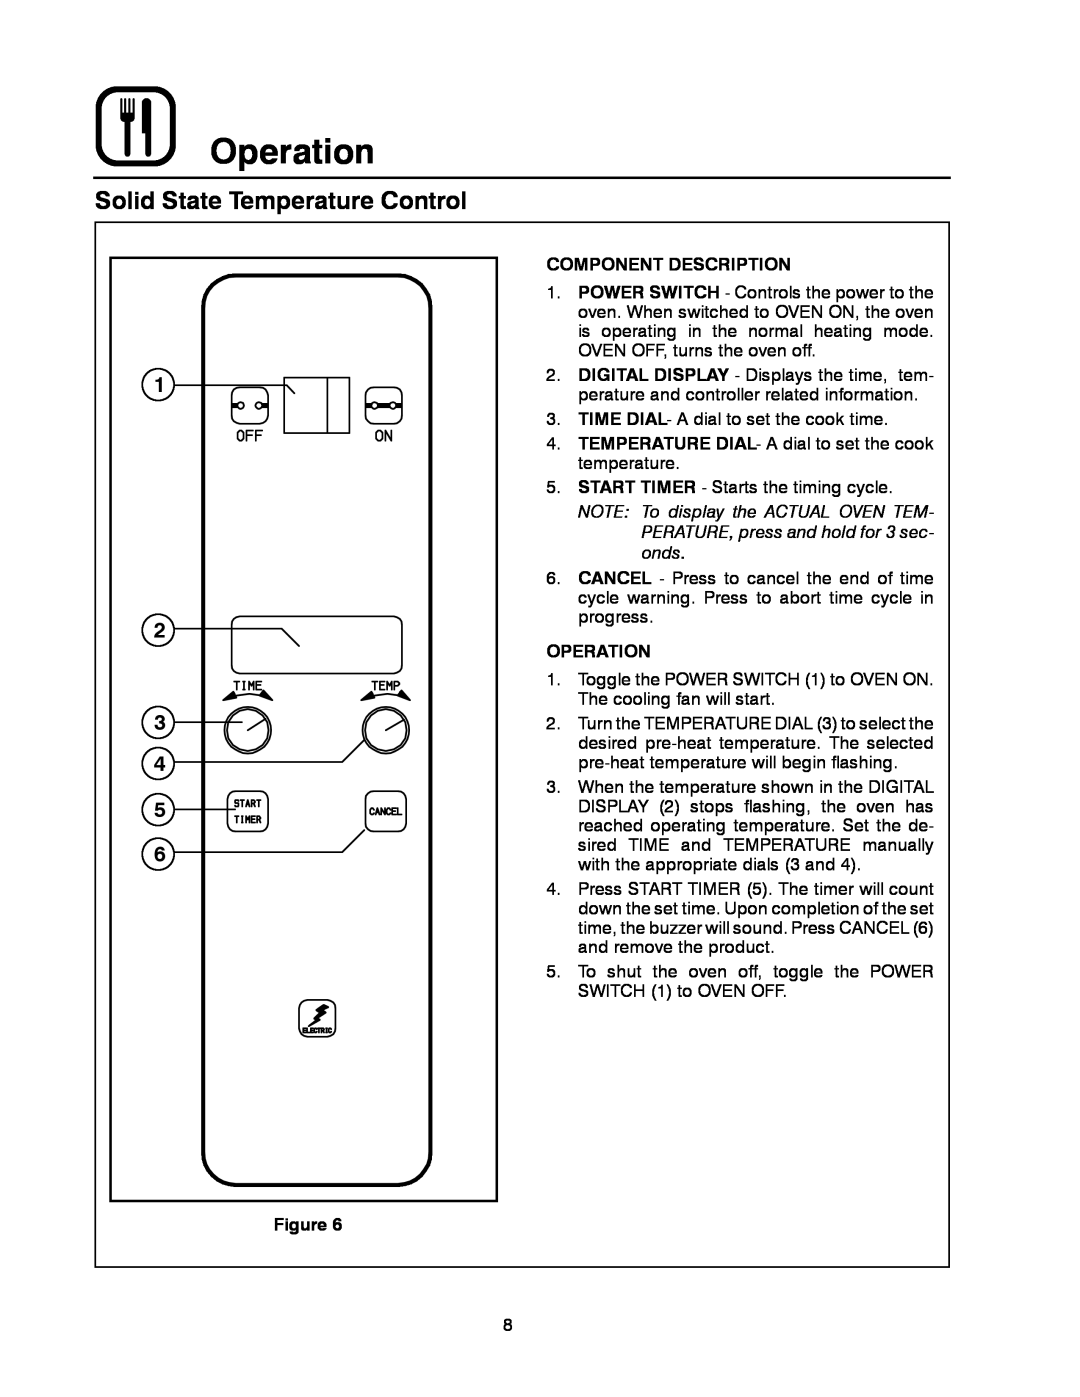 Blodgett 1415 manual Operation, Solid State Temperature Control, Component Description 